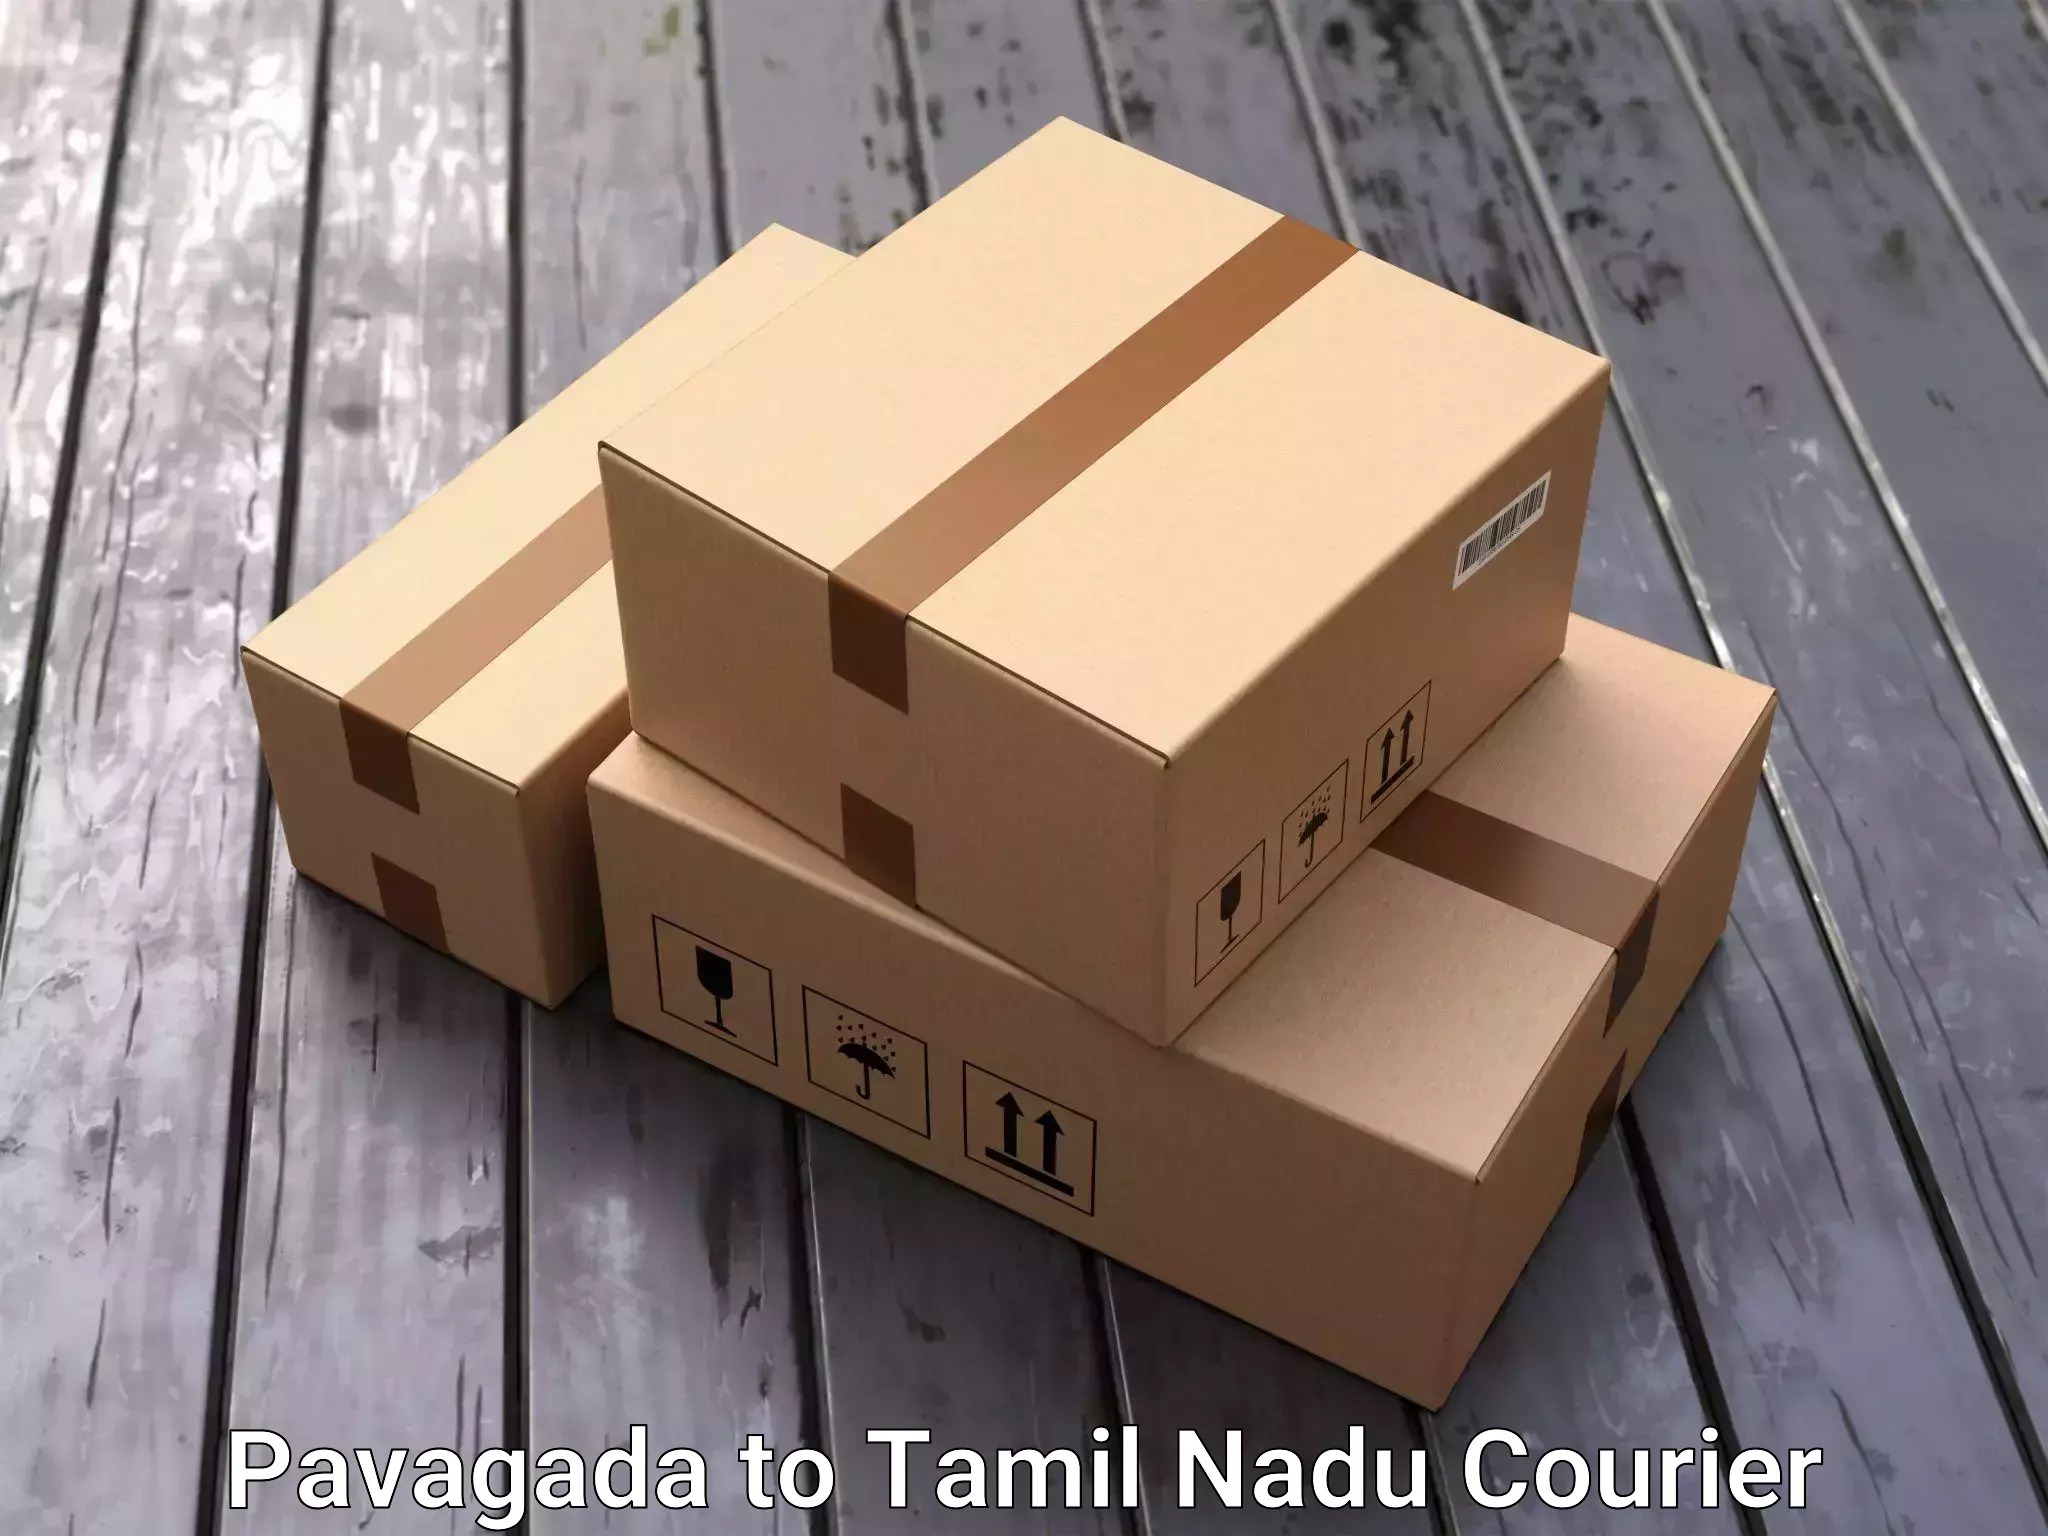 Furniture delivery service Pavagada to Chennai Port